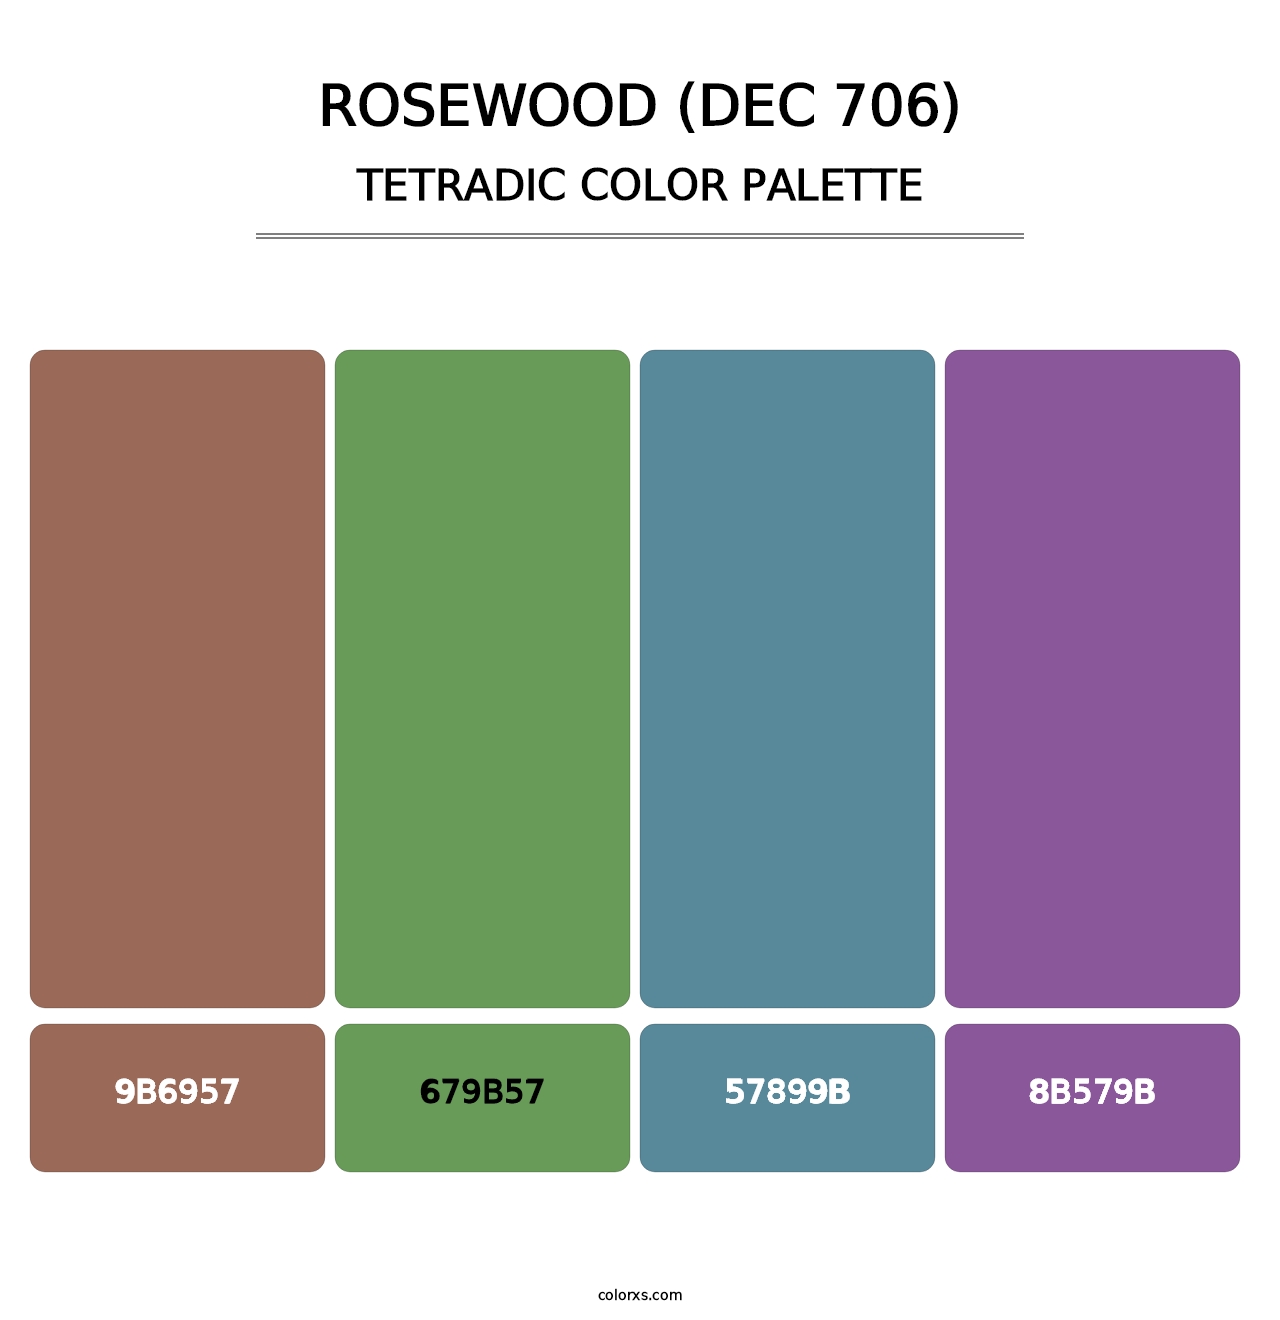 Rosewood (DEC 706) - Tetradic Color Palette